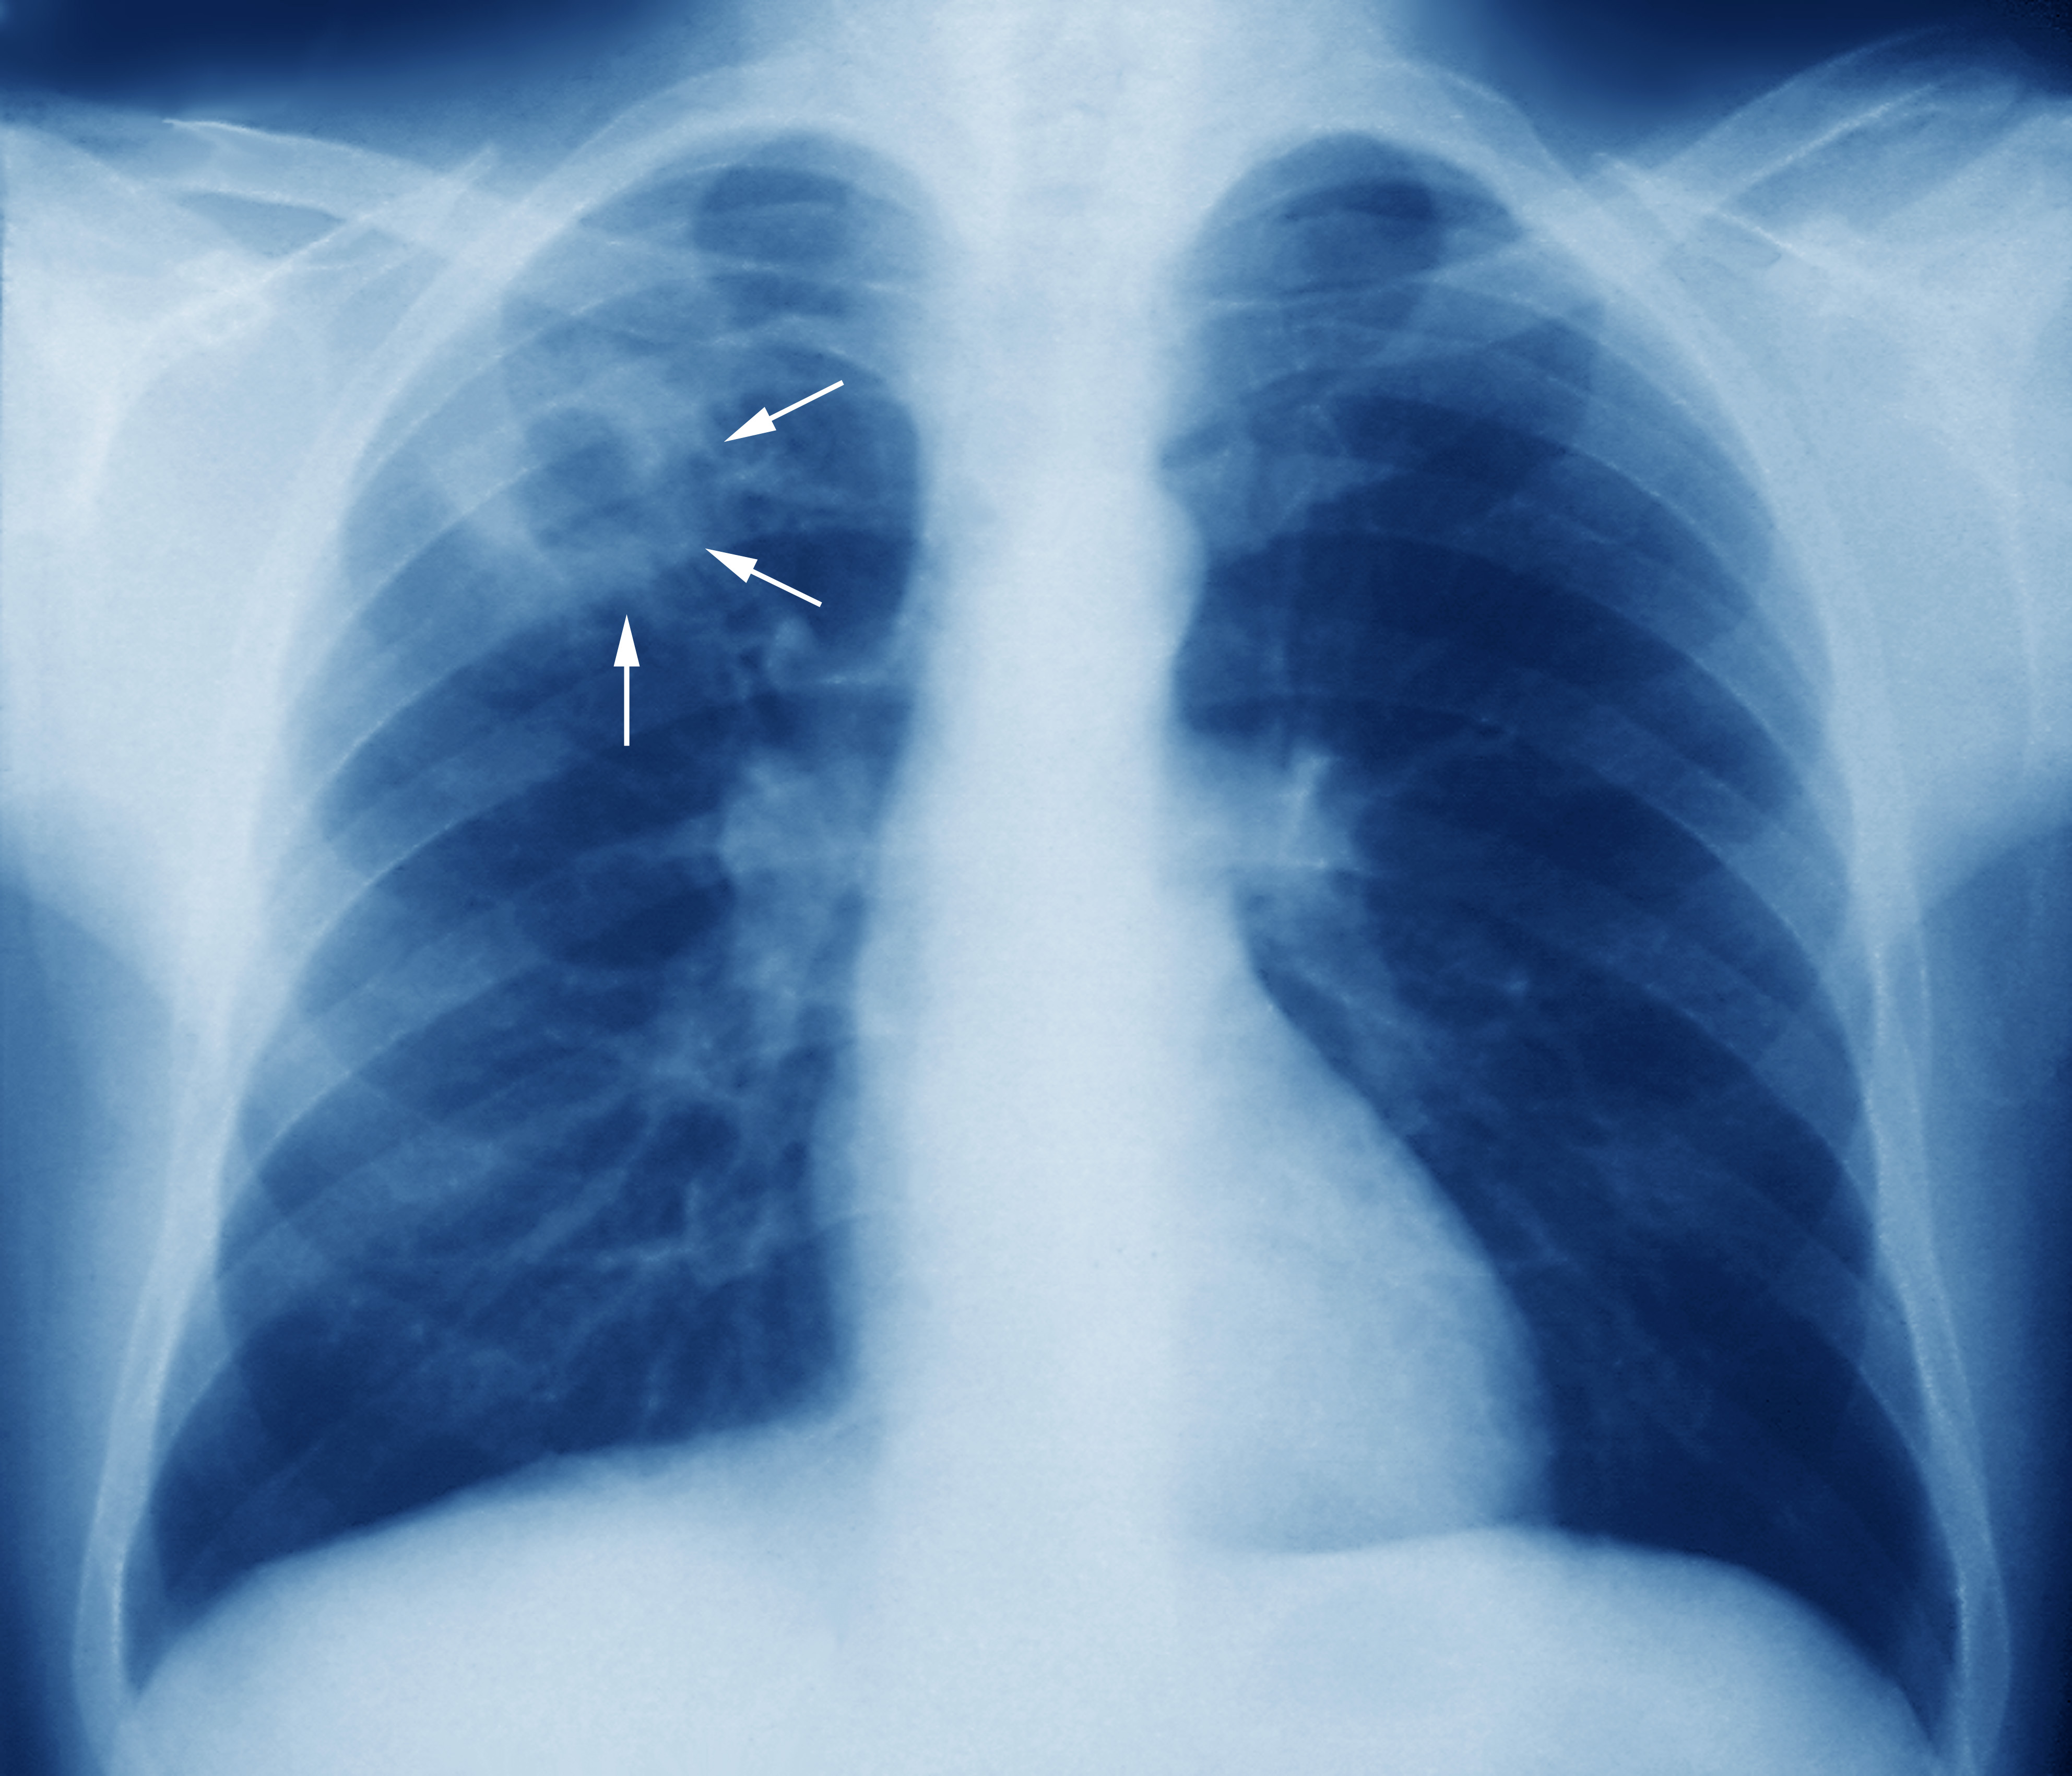 https://aldiwa.net/wp-content/uploads/2020/12/m2700245-tuberculosis-chest-x-ray-science-photo-library-high.jpg